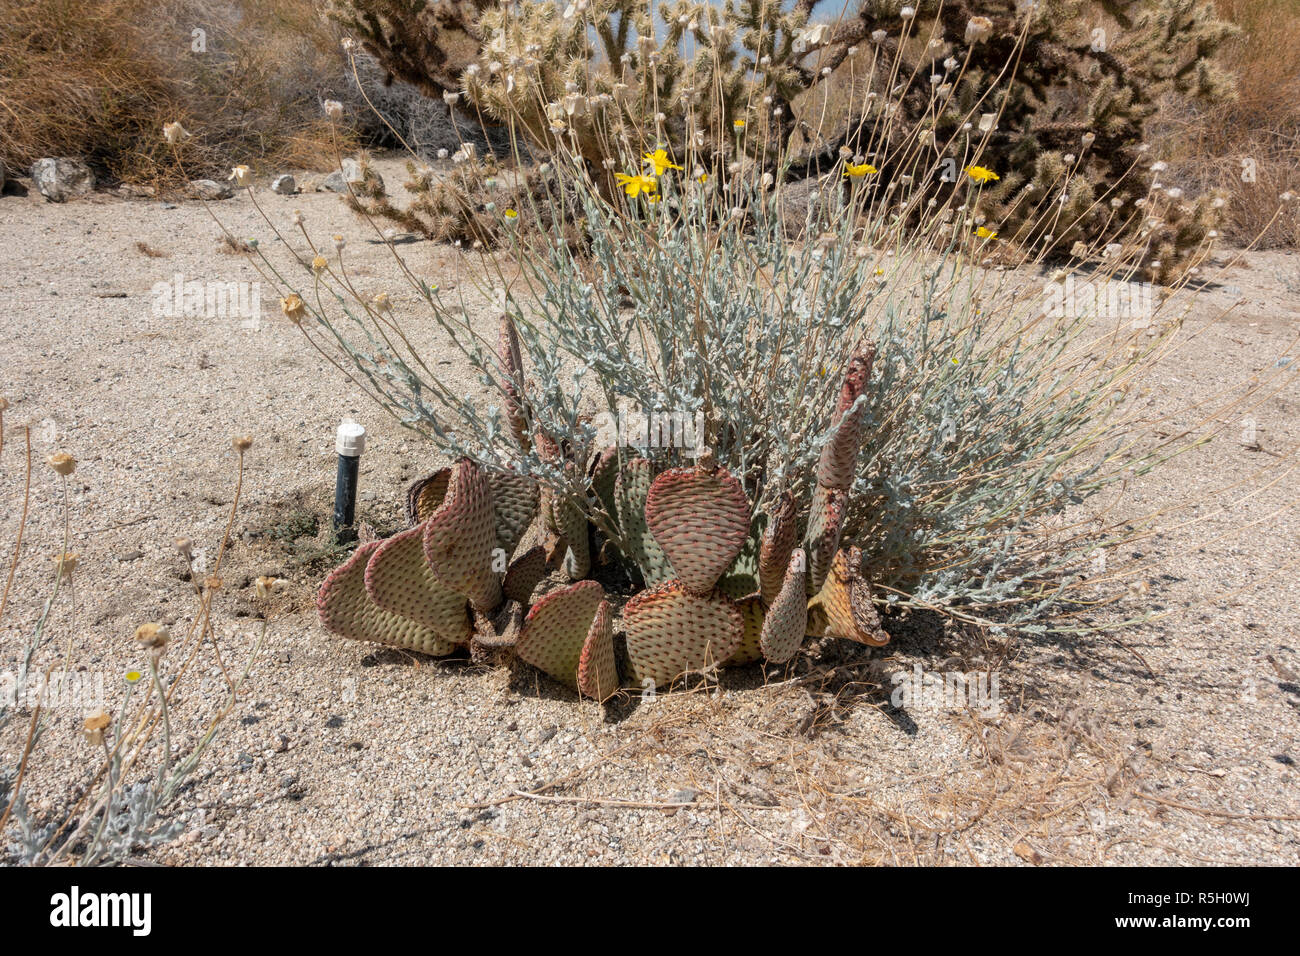 Coda di castoro cactus (Opuntia basilaris), Ed Hastey Garden Trail, Santa Rosa e San Jacinto Mountains National Monument, Palm Desert, CA, Stati Uniti d'America. Foto Stock